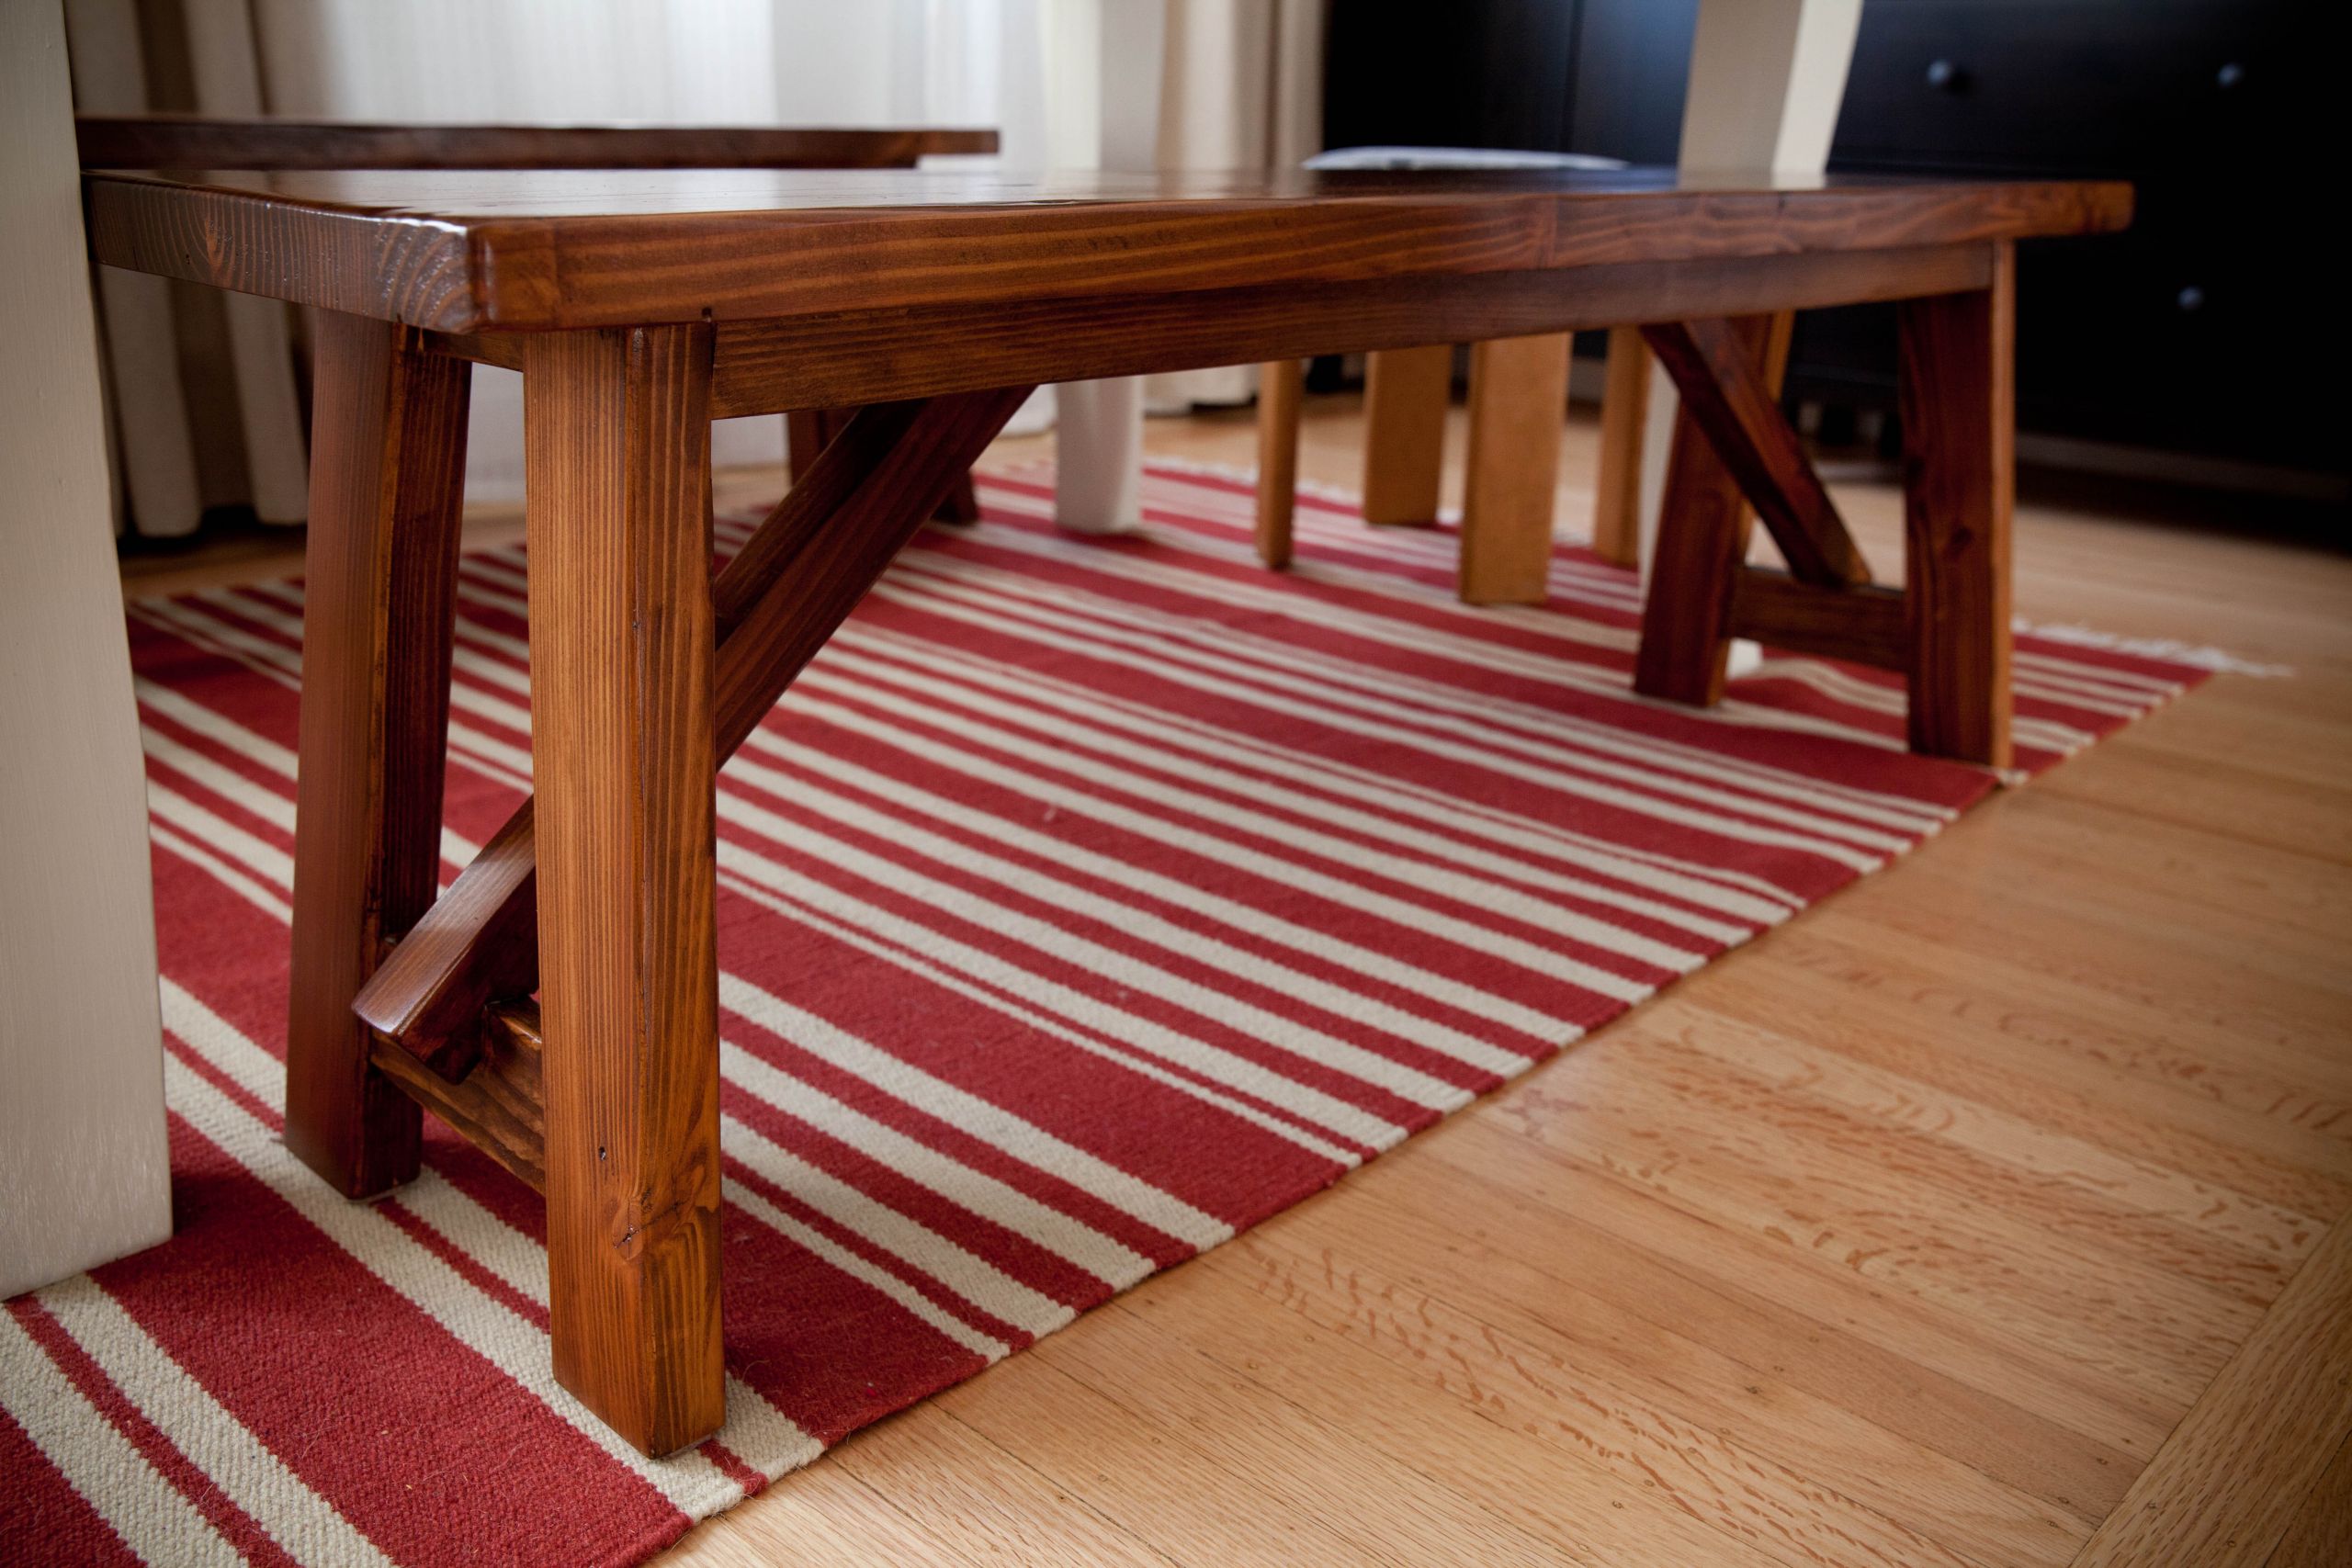 Reclaimed Wood Dining Table DIY
 DIY reclaimed barnwood dining table